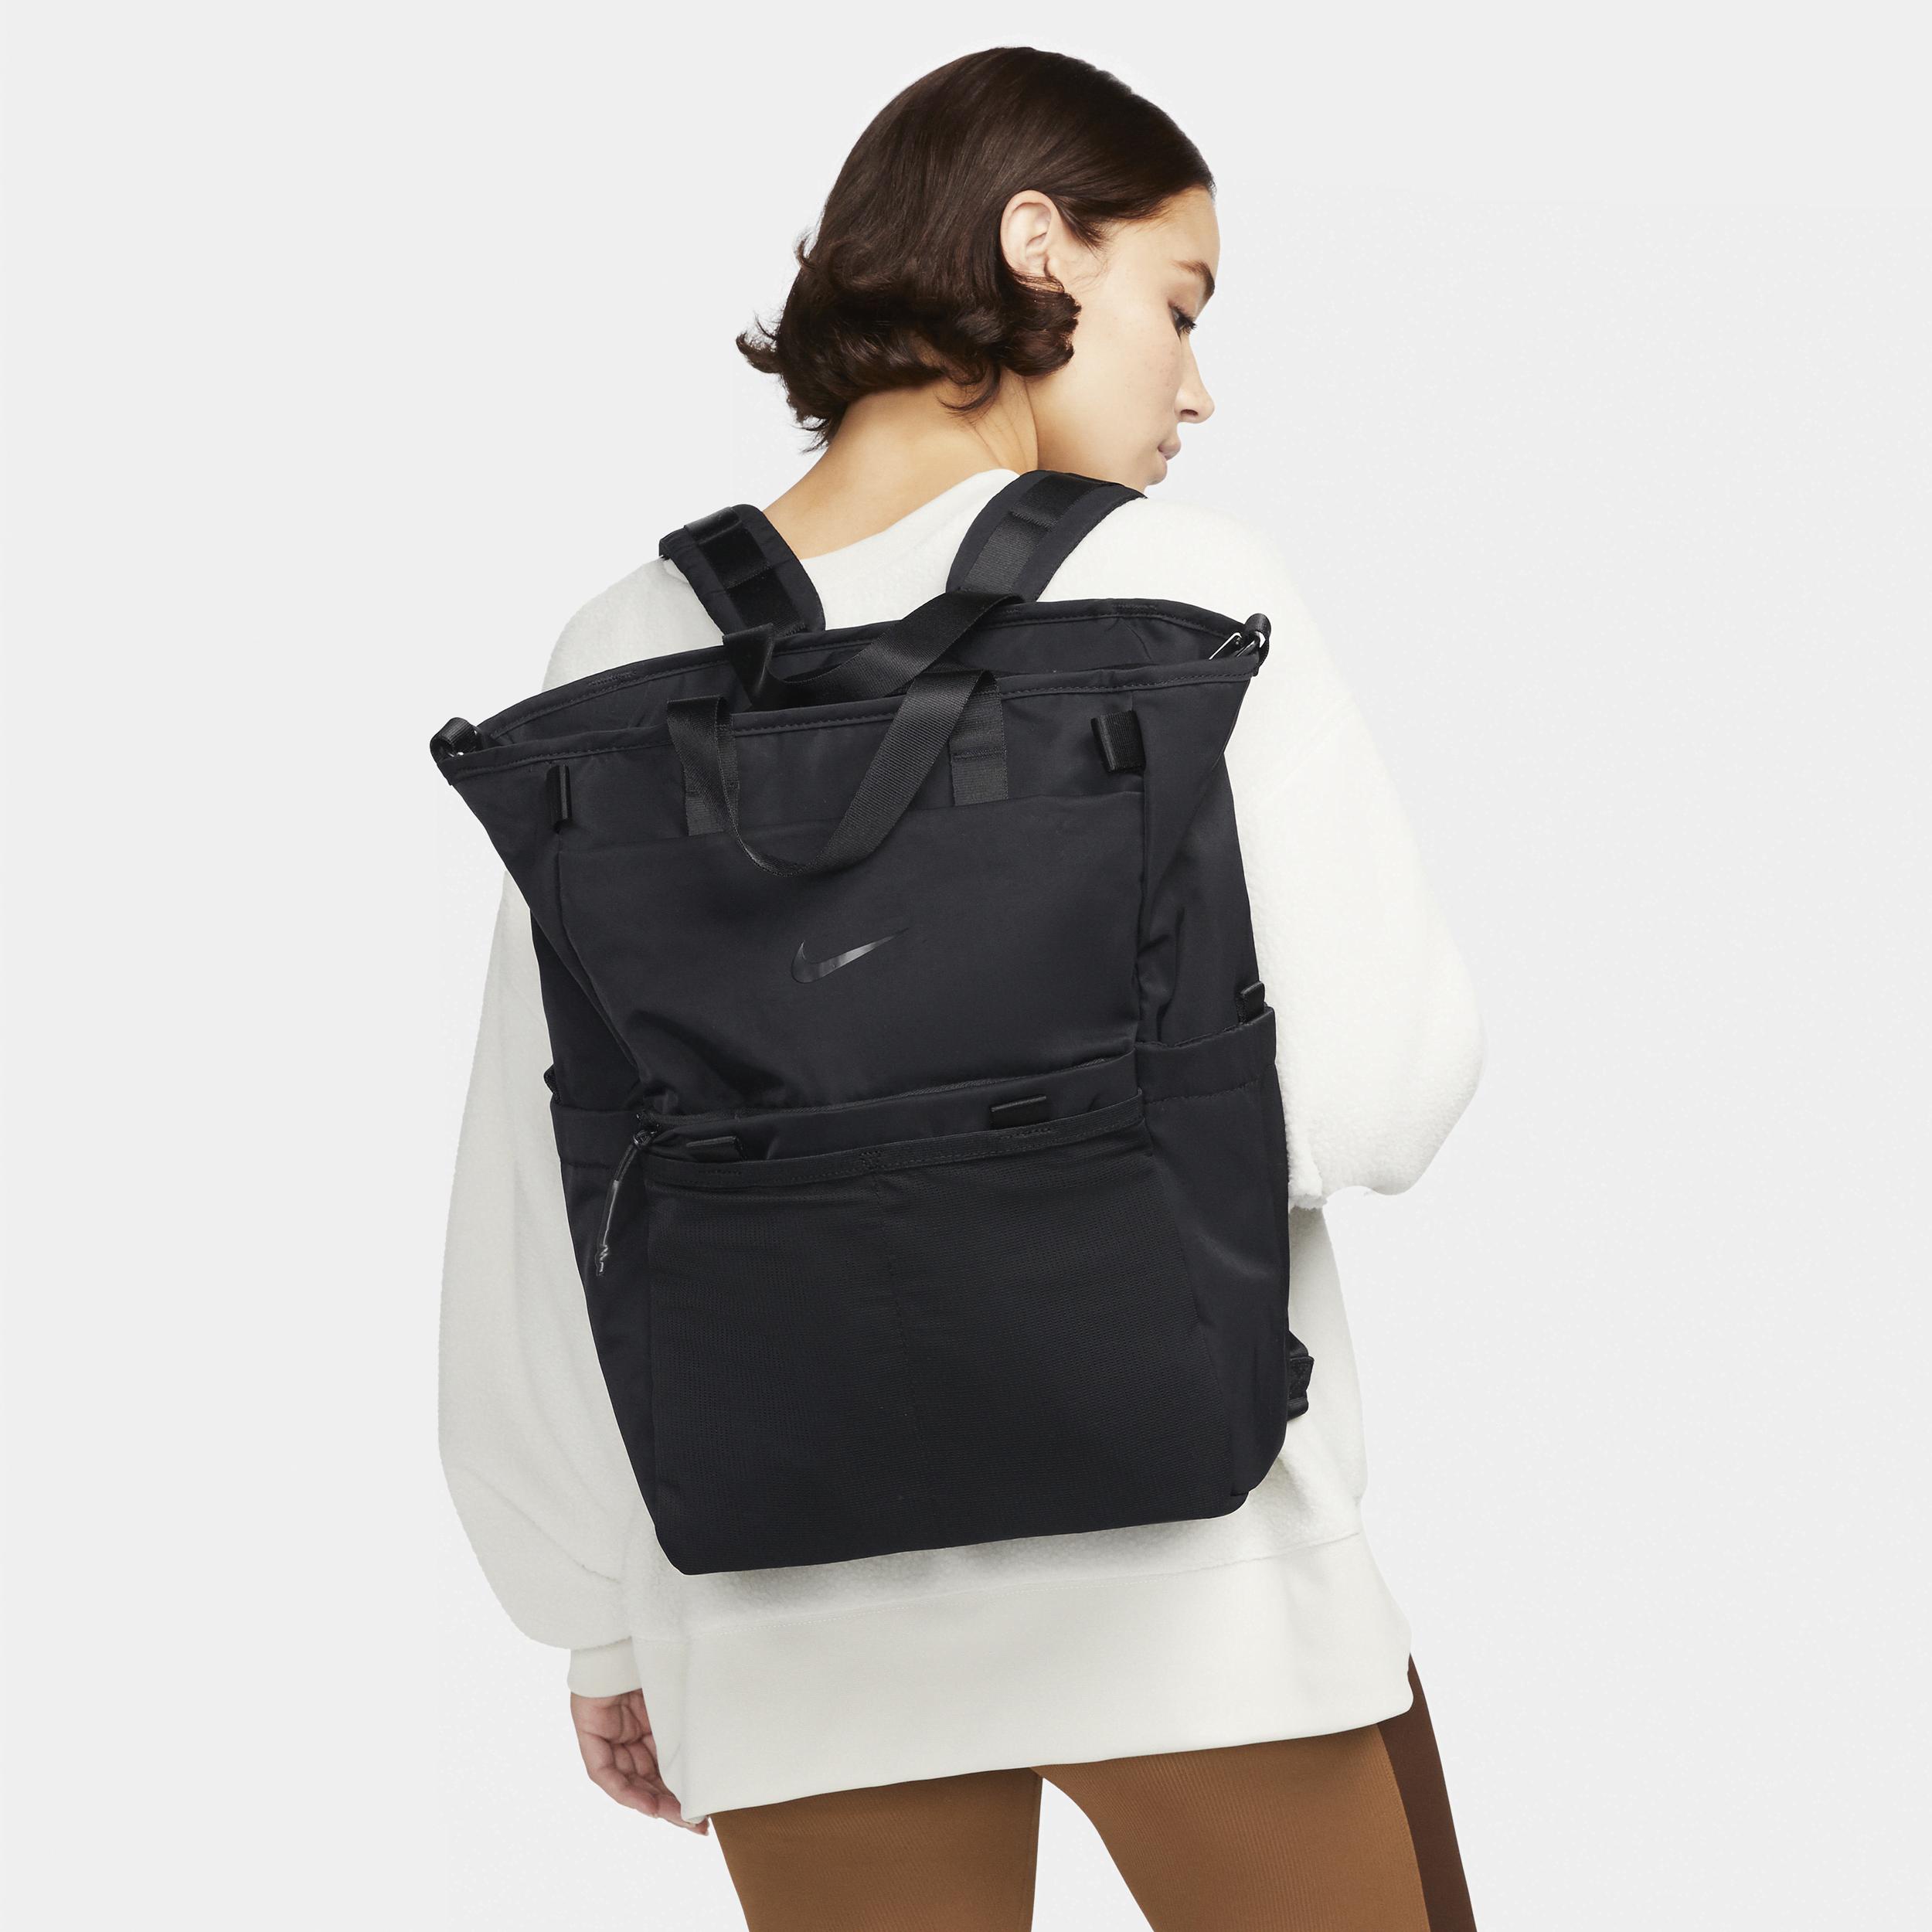 Nike Shoe Box Bag (12L) Black | BSTN Store